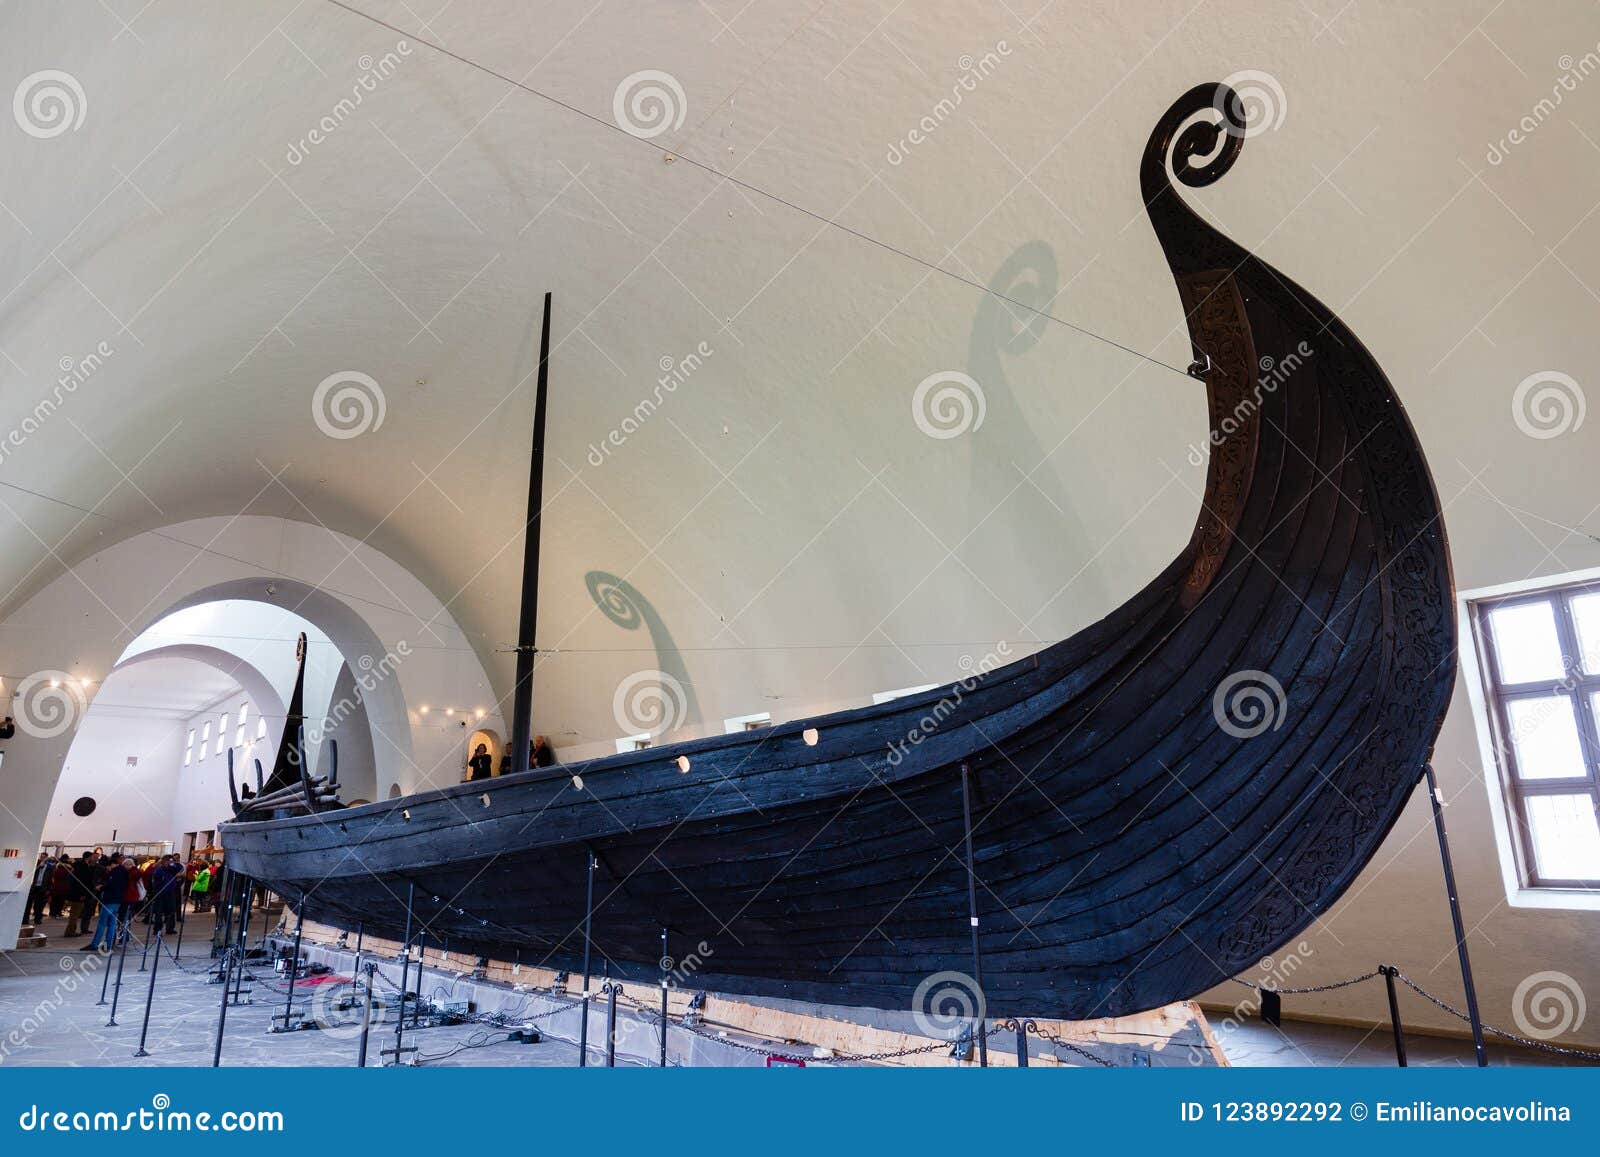 viking museum oslo